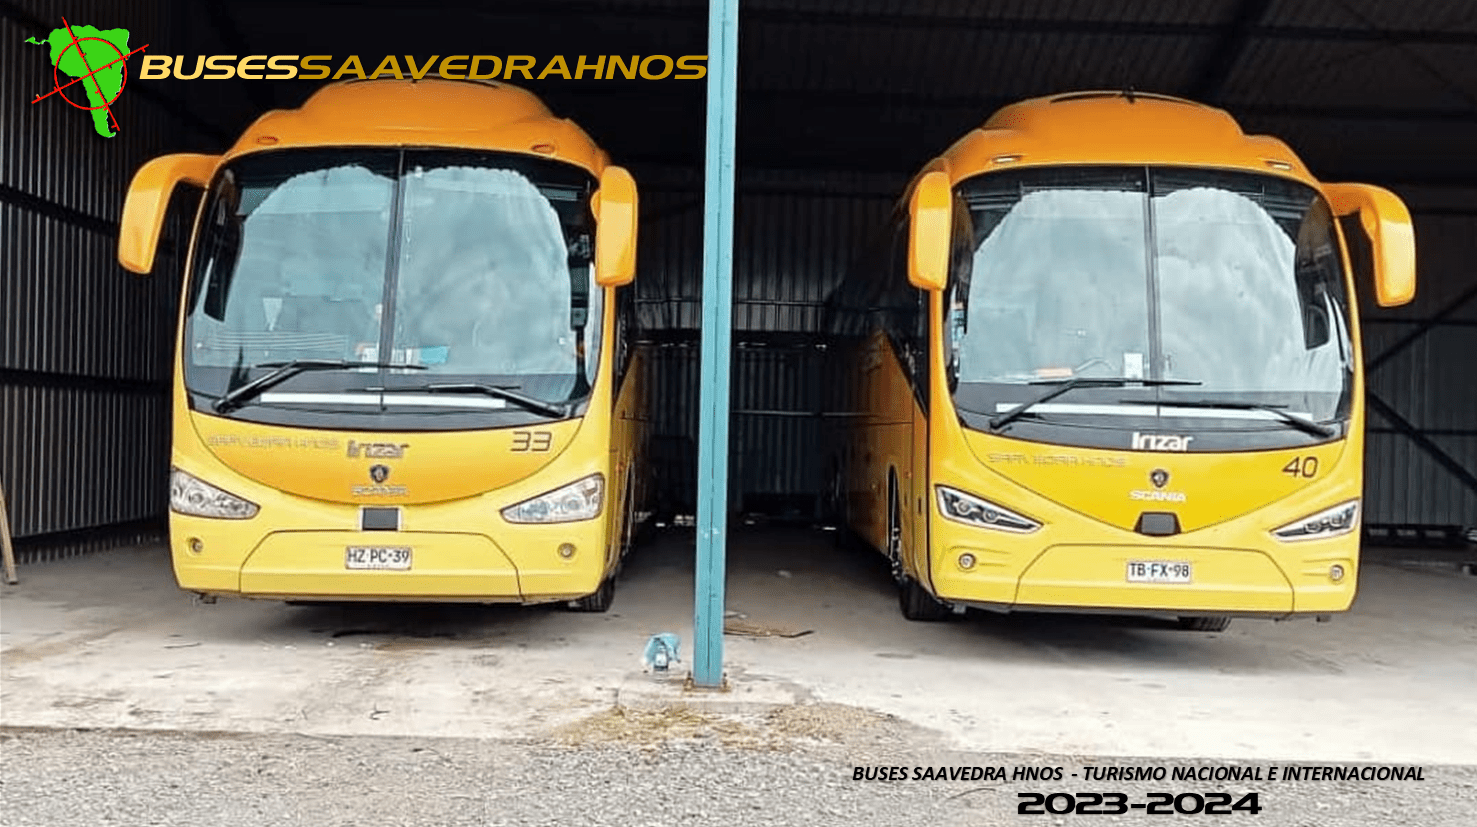 Buses Saavedra Hnos - Turismo - 05-min